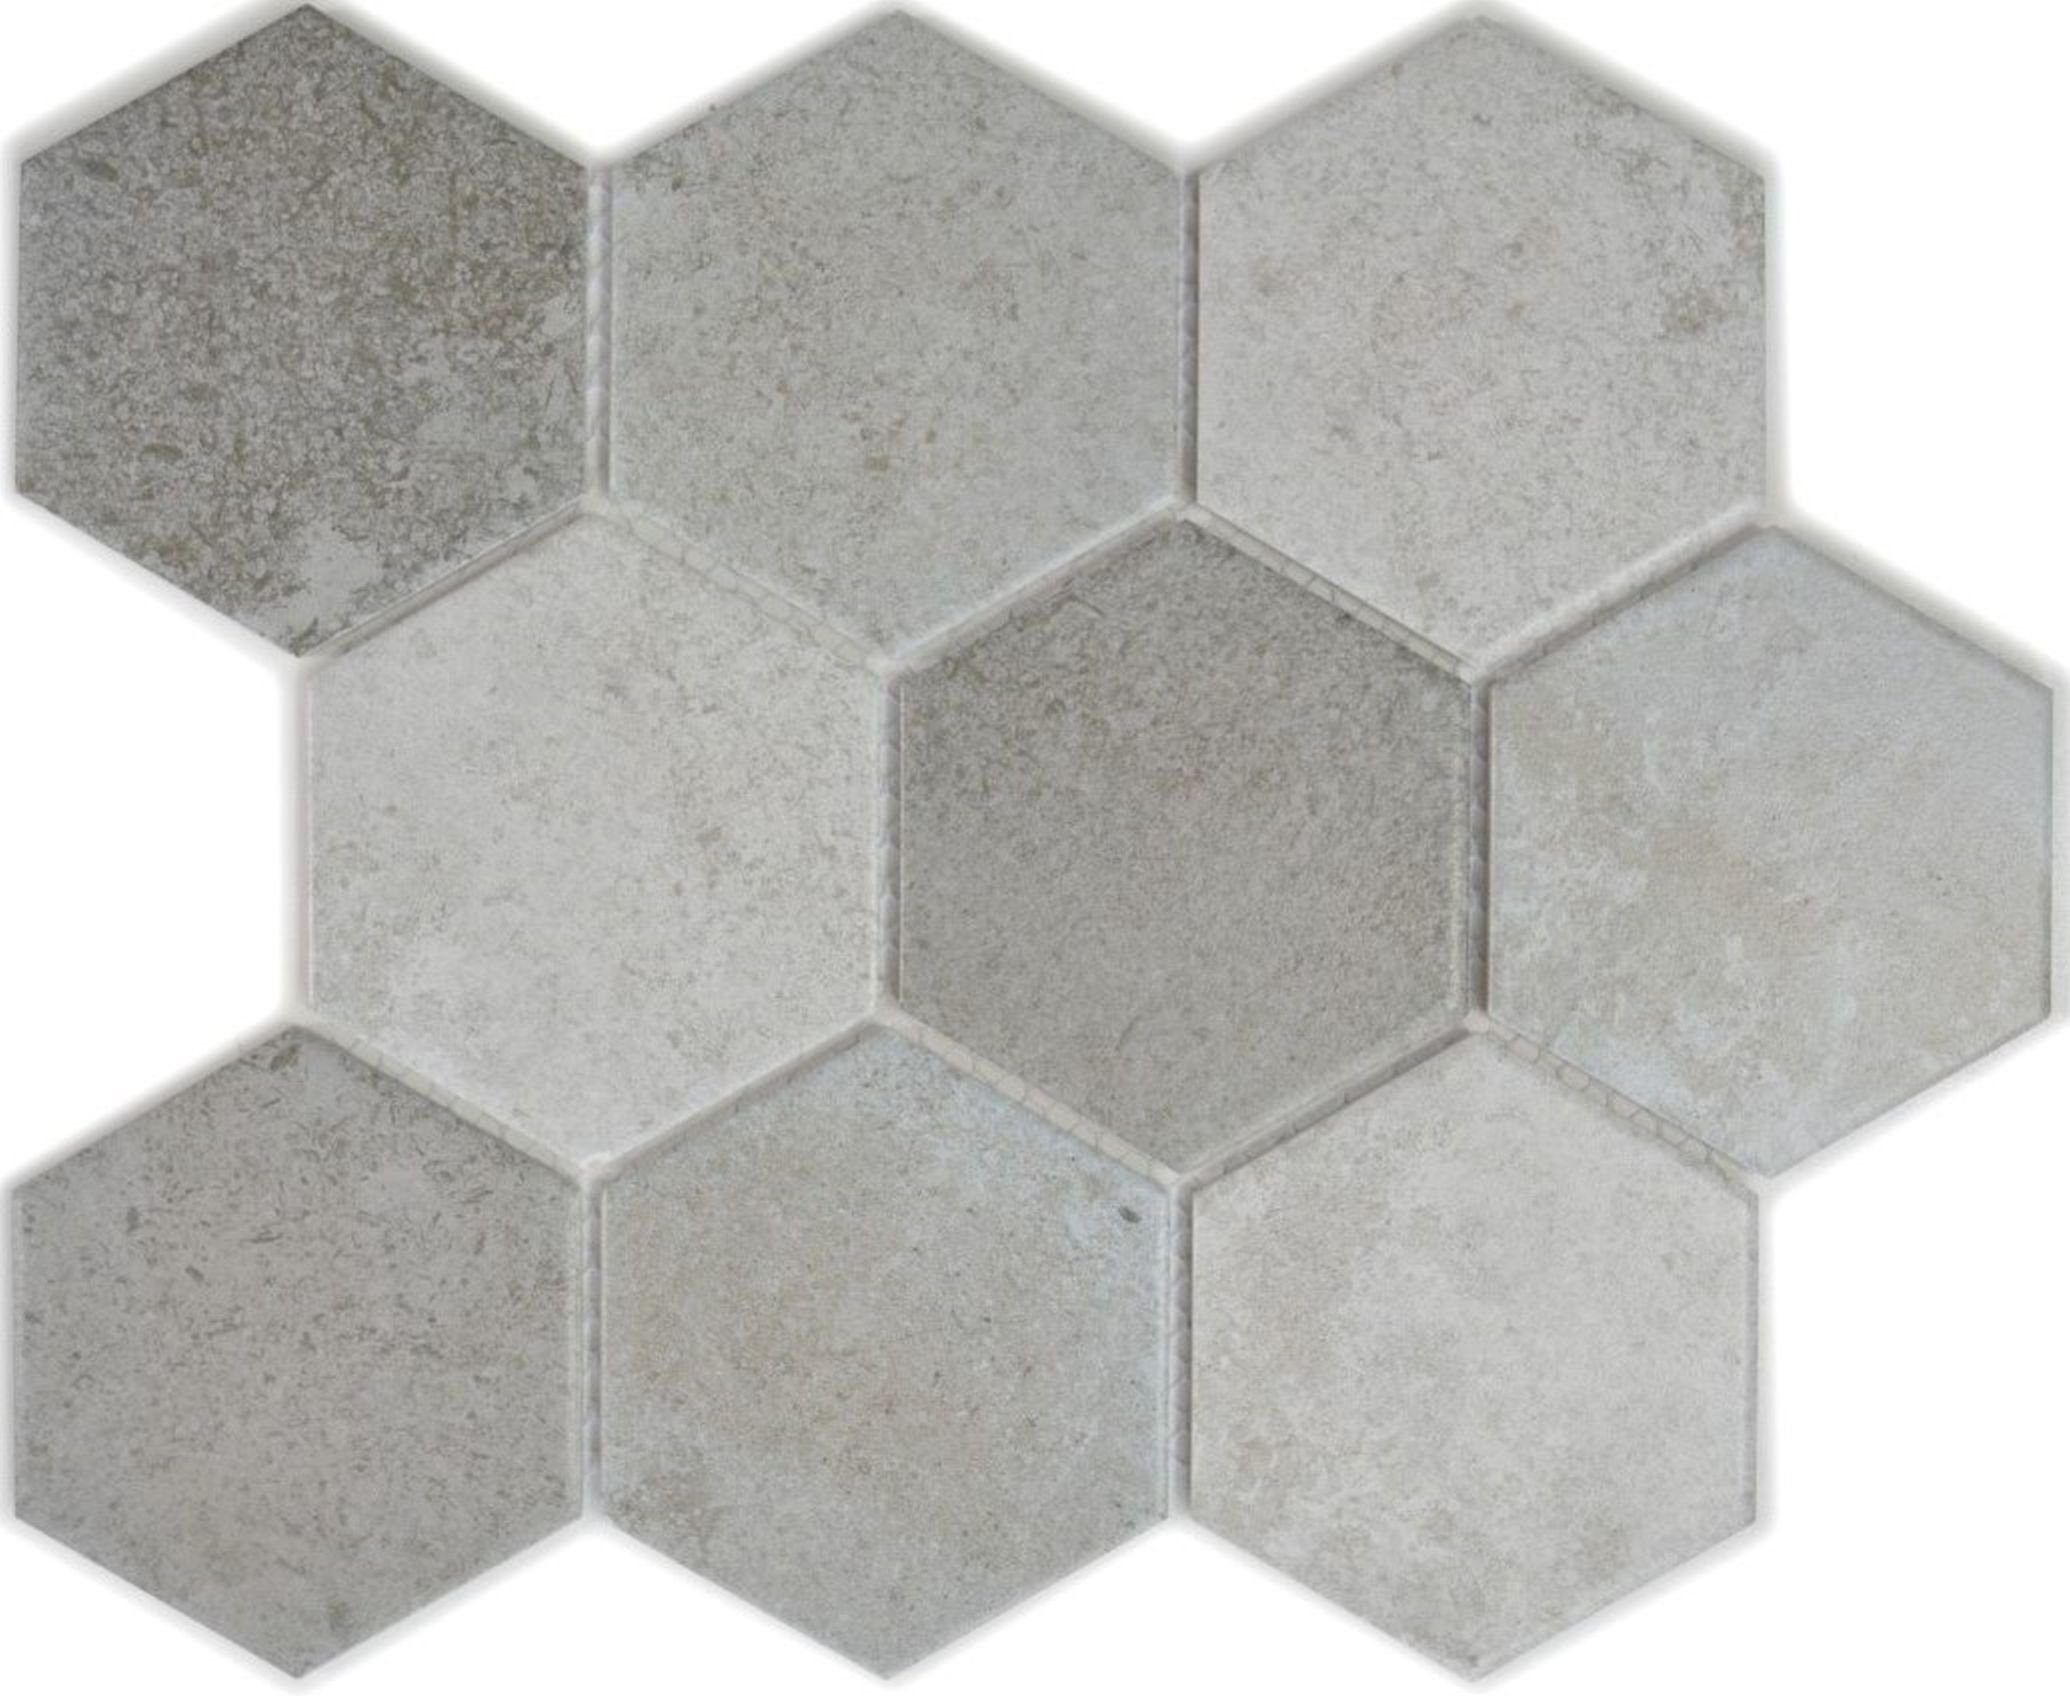 Bad Fliese grau Mosaik WC Mosaikfliesen Küche Keramik XL Sechseck Mosani Hexagonale